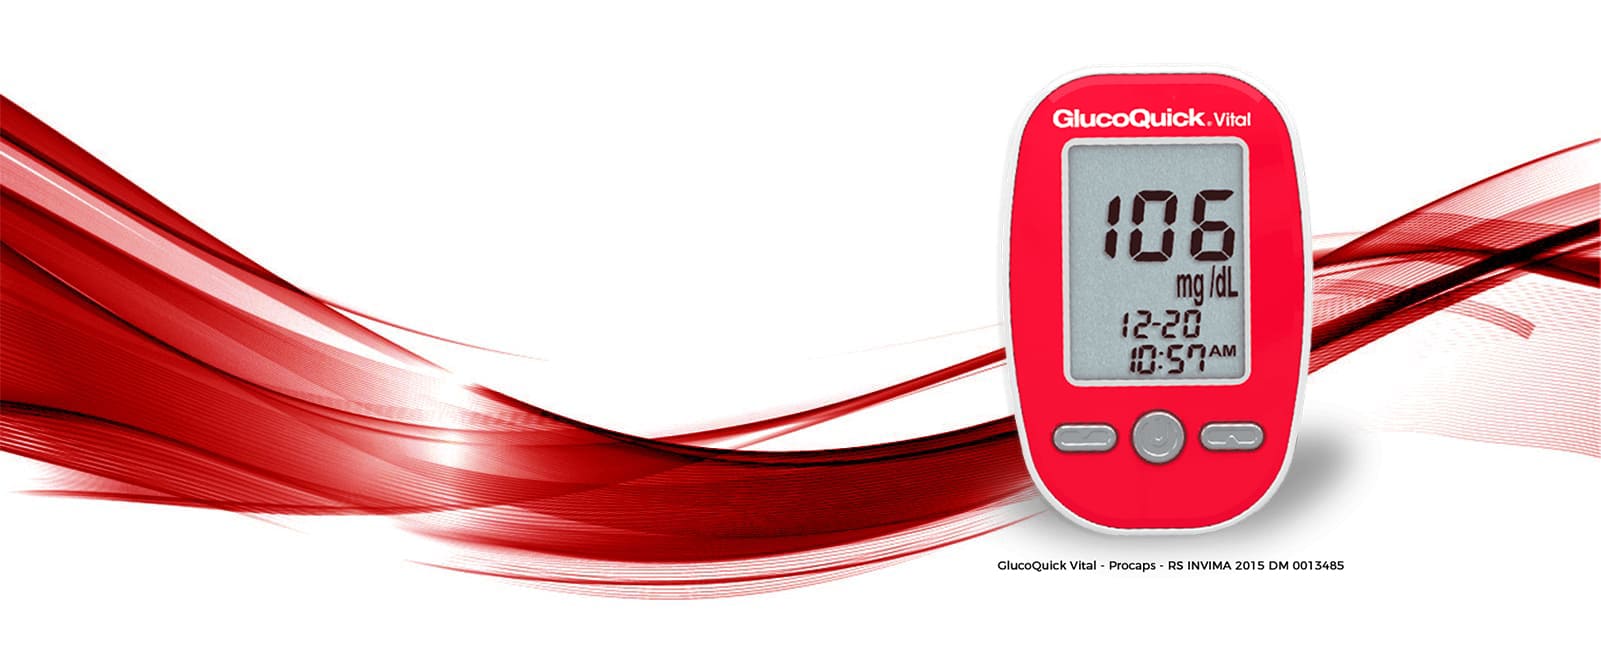 Glucoquick Vital Diabetrics